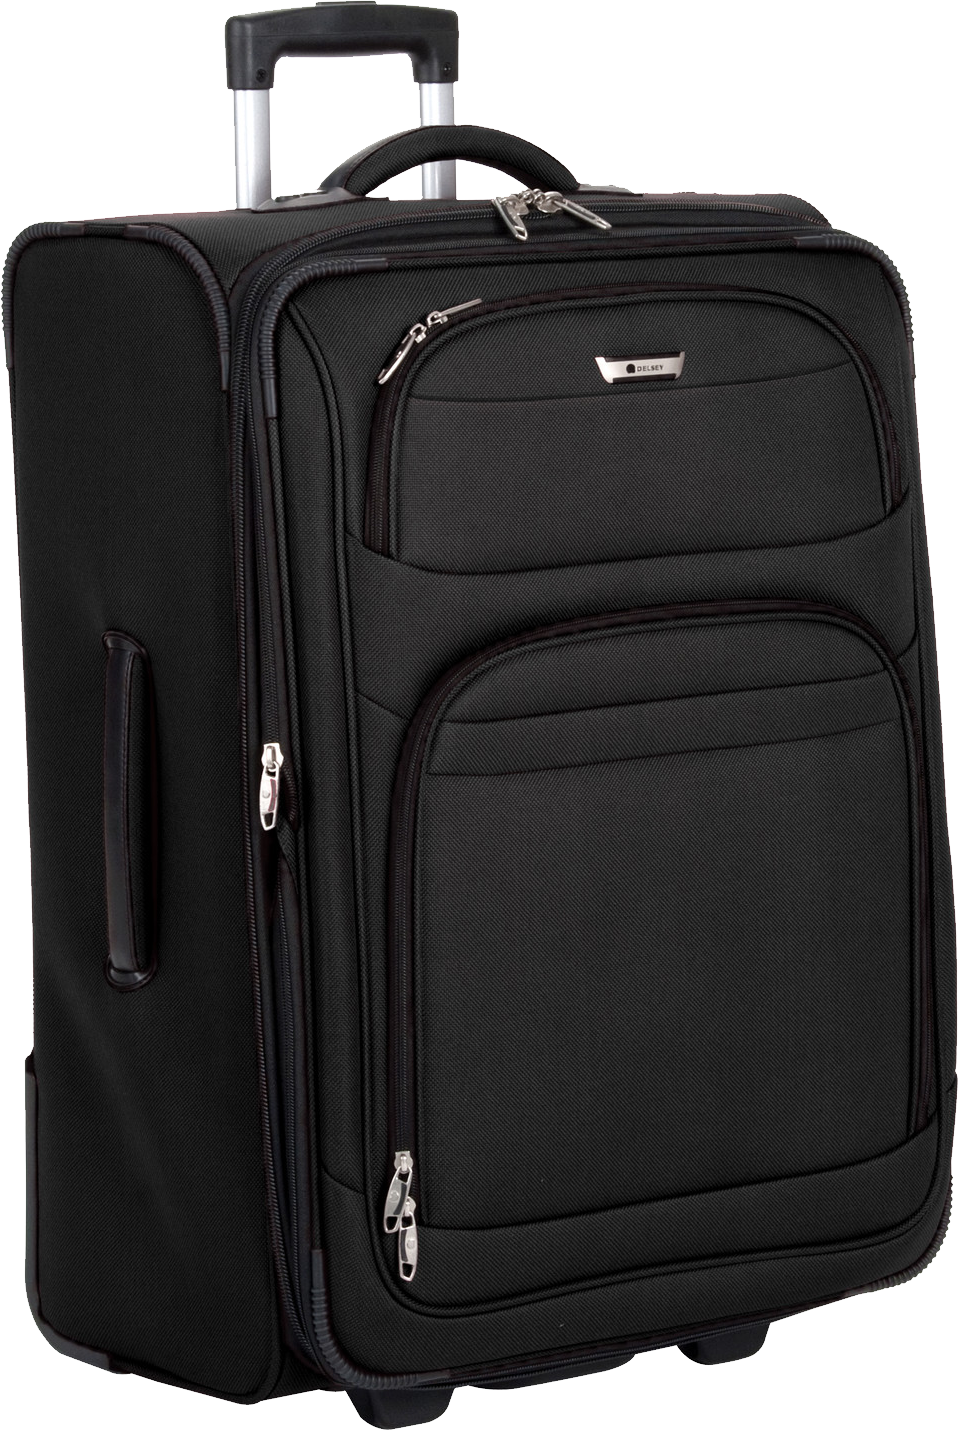 Black Wheeled Carry On Luggage PNG image